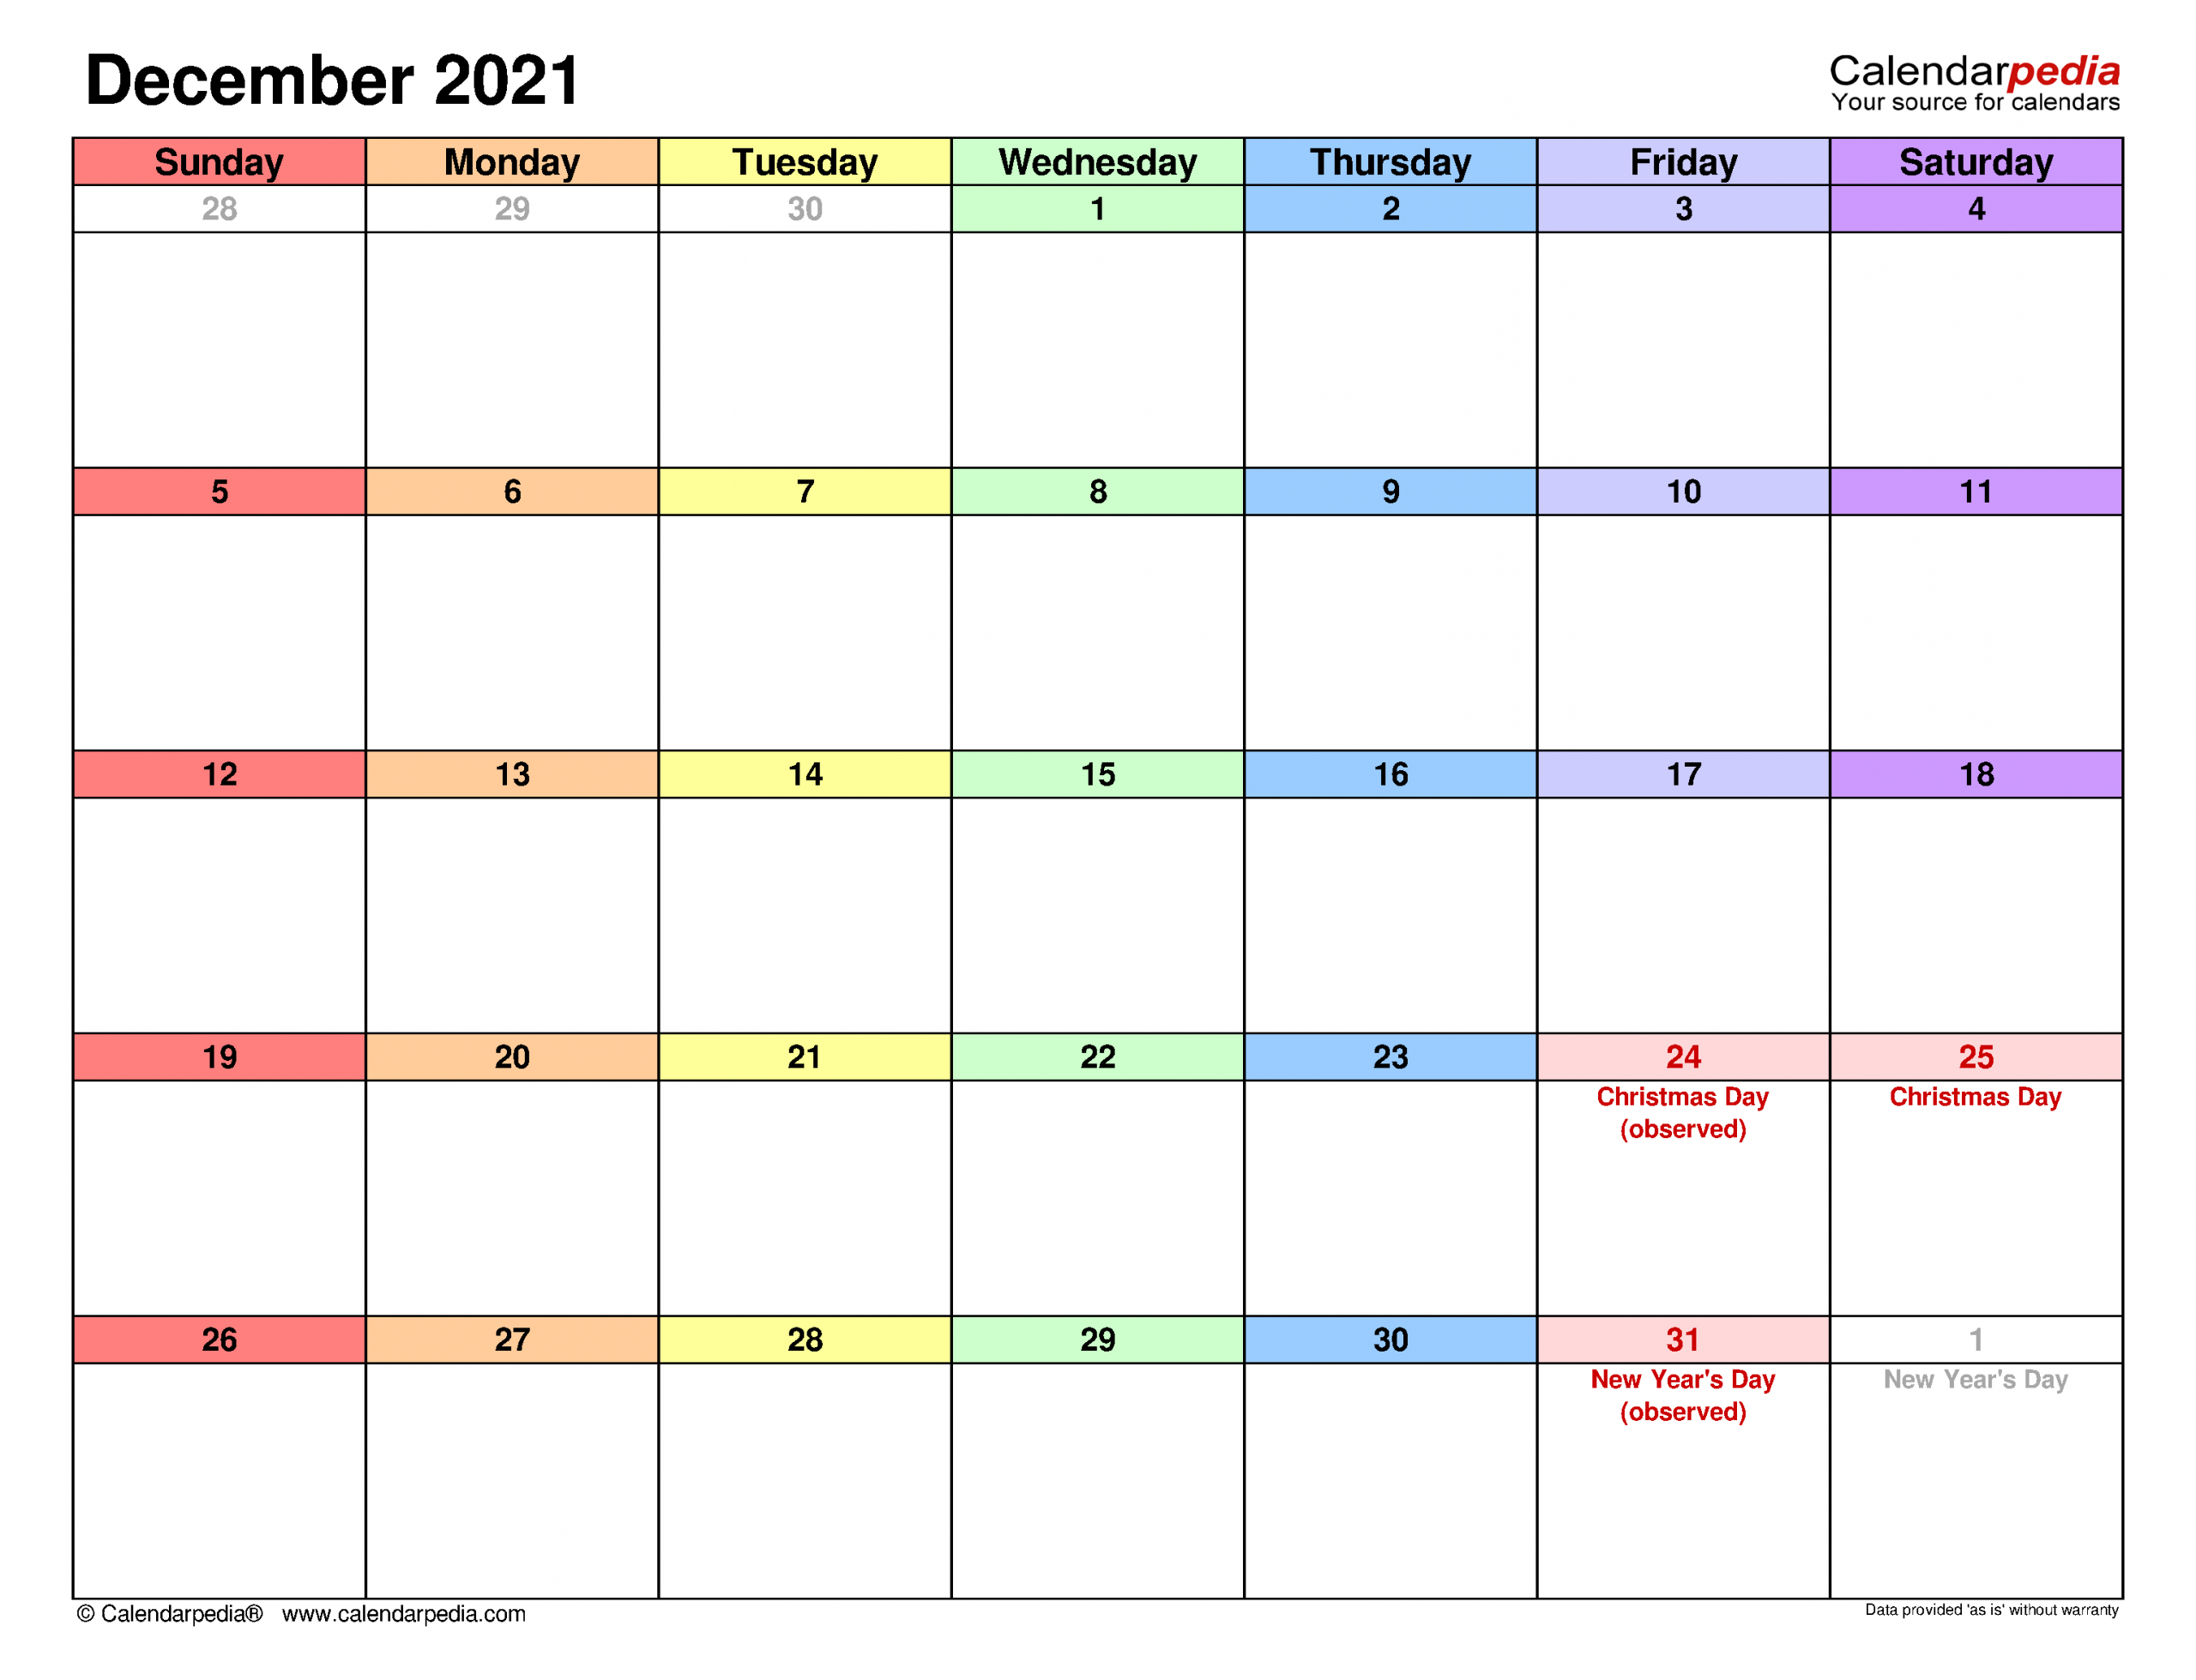 December 2021 Calendar | Templates For Word, Excel And Pdf Calendar Of December 2021